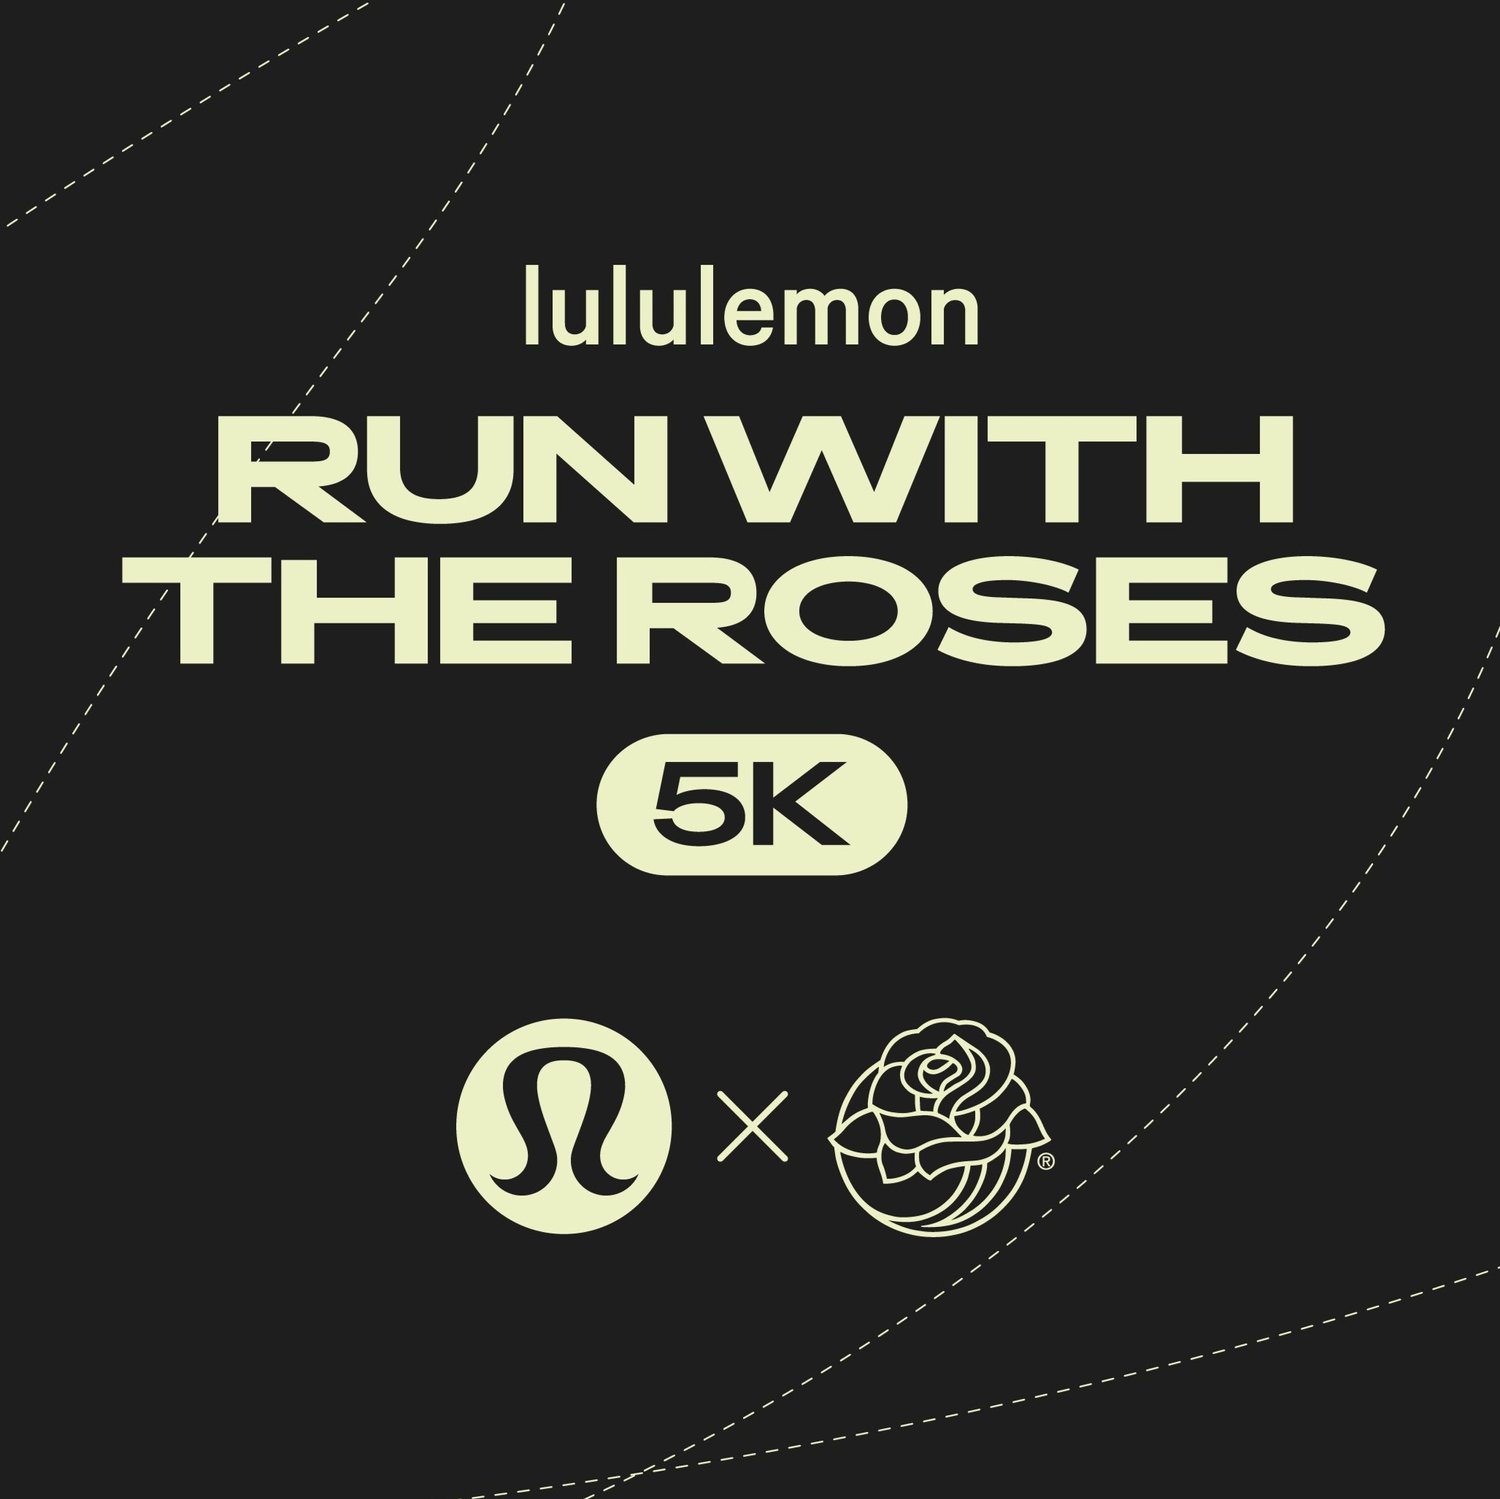 lululemon Run With the Roses 5K